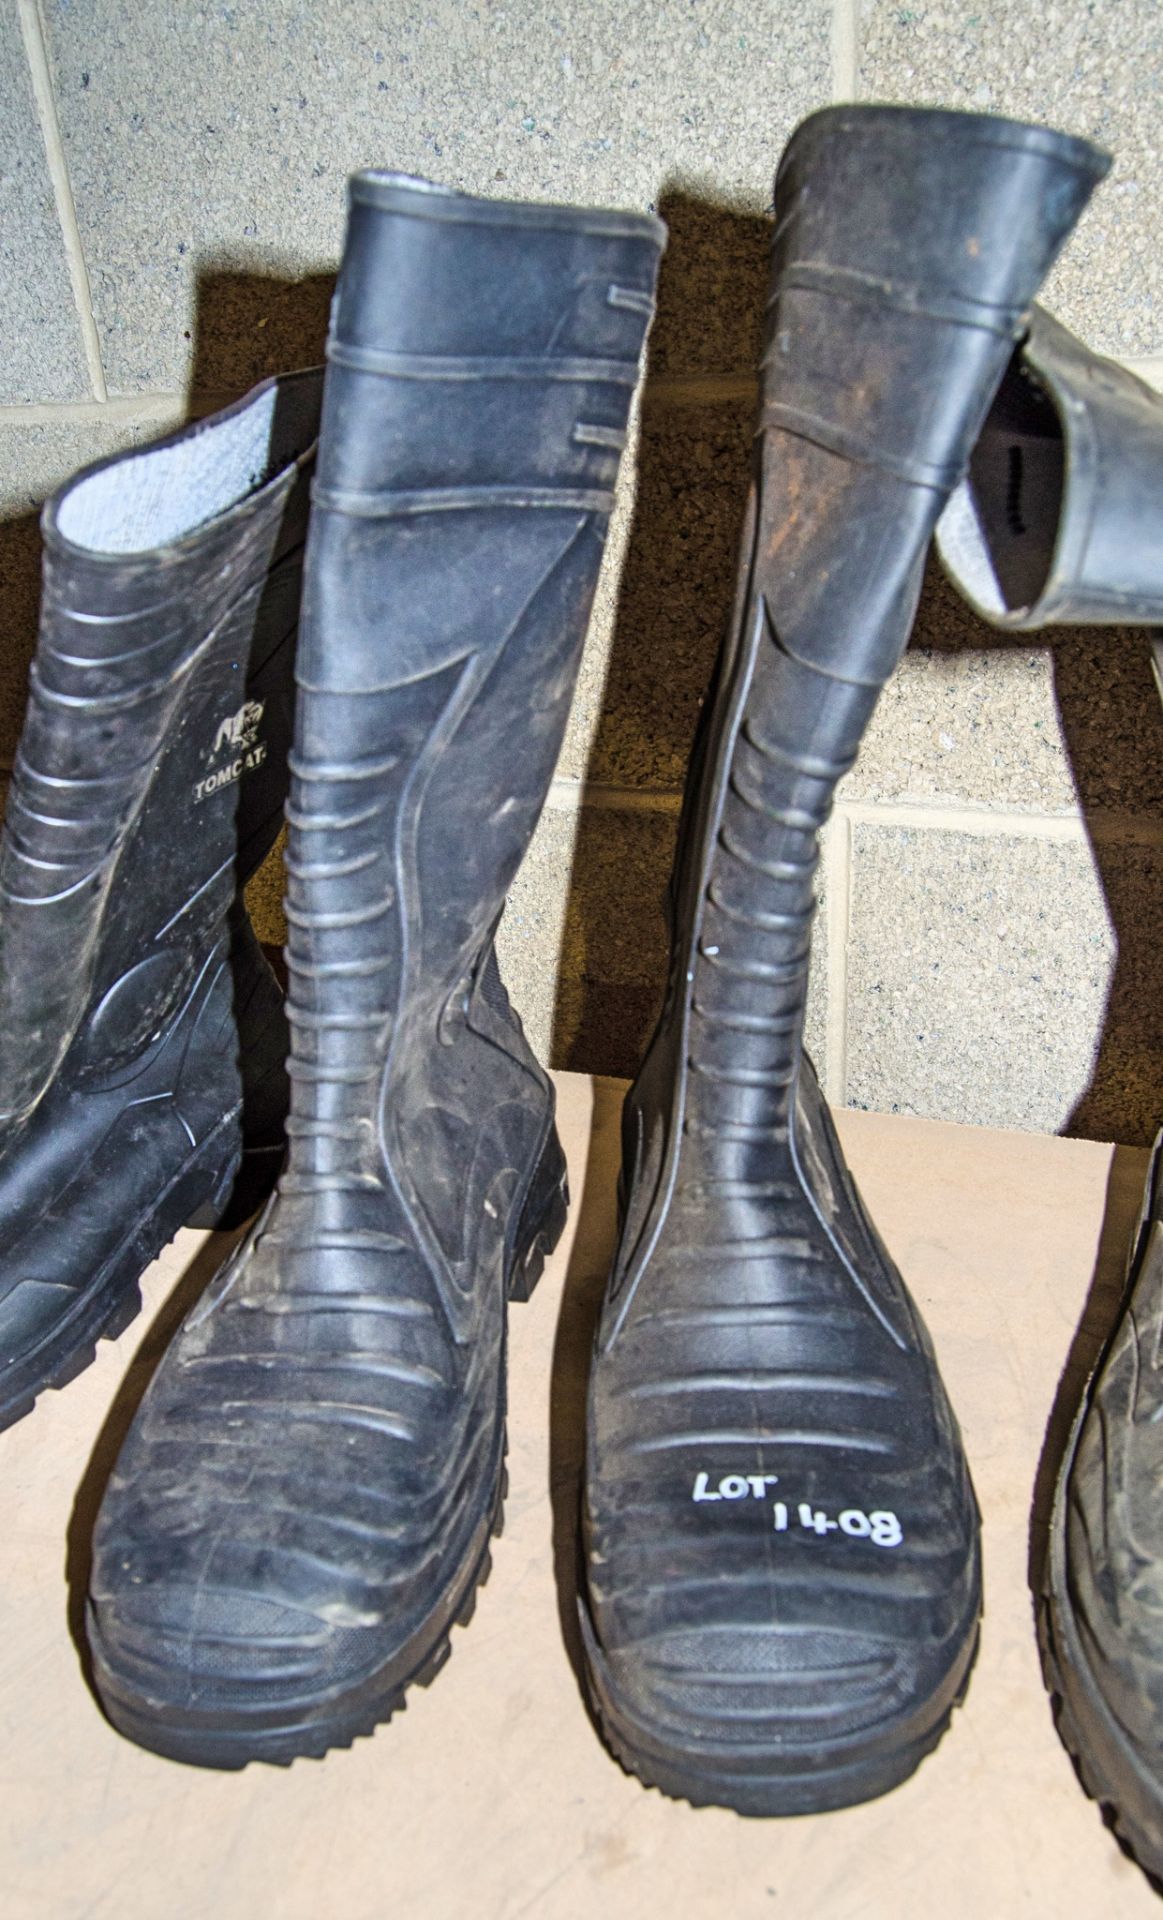 Pair of size 12 Vital steel toe cap wellington boots